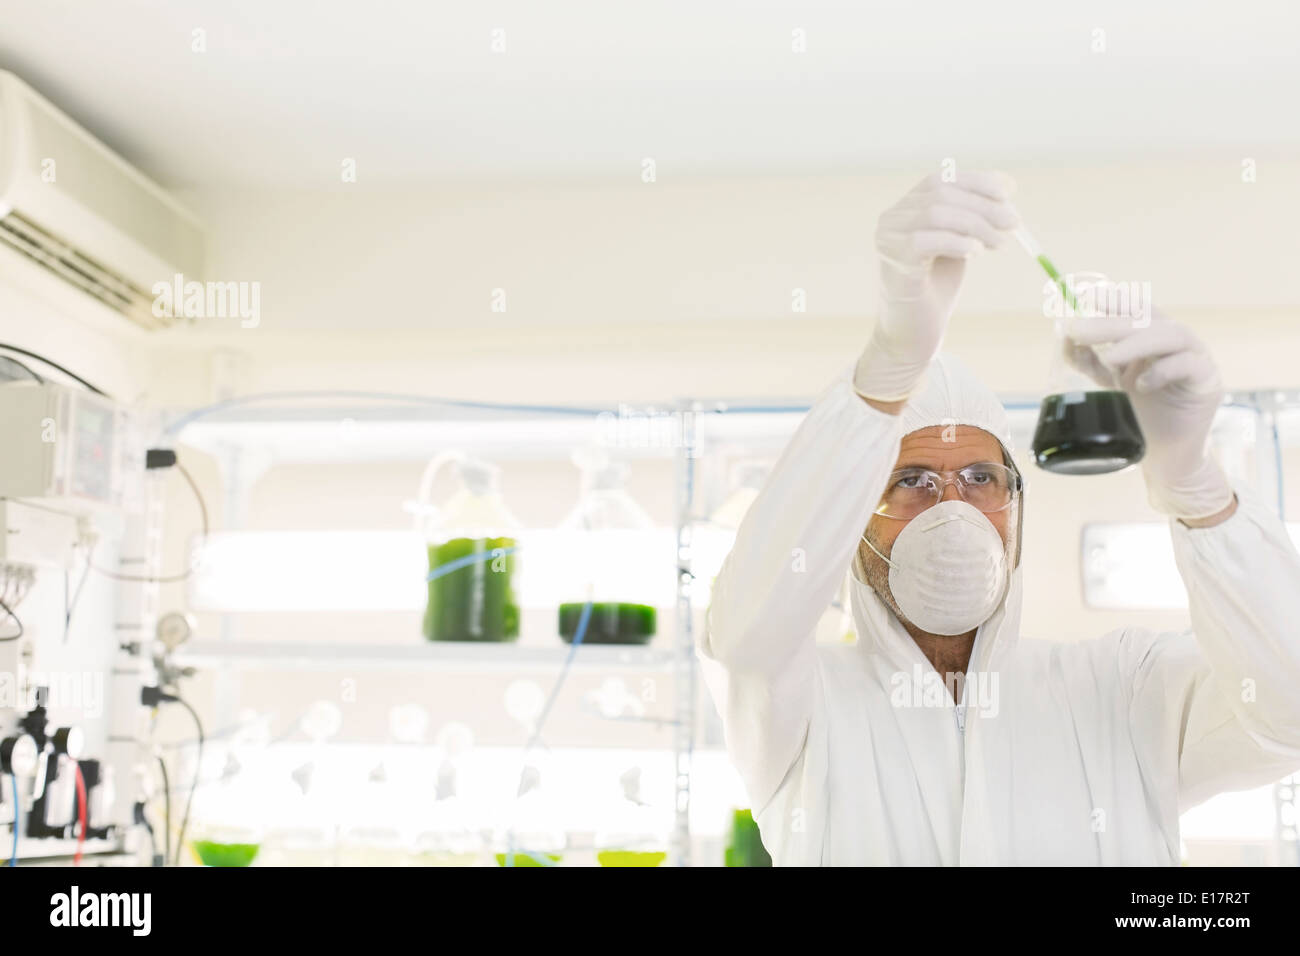 Scientist in clean suit conducting scientific experiment in laboratory Stock Photo